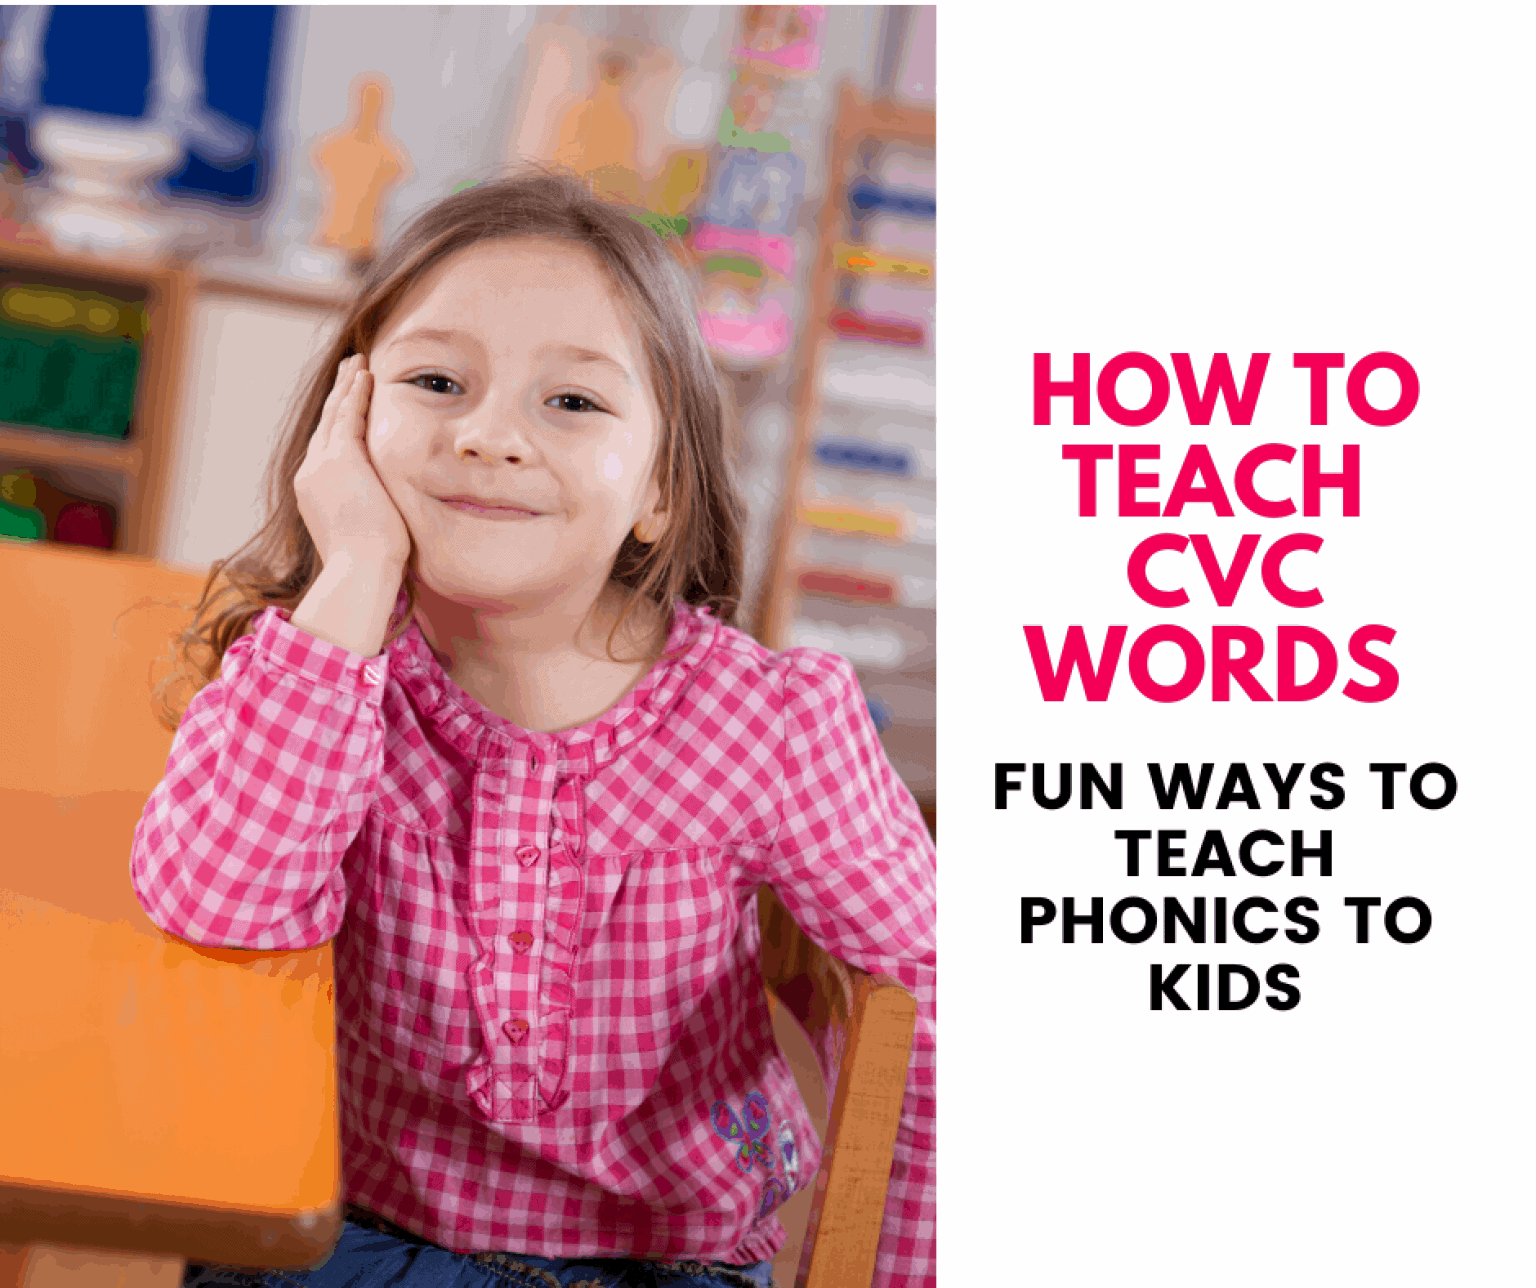 how-to-teach-cvc-words-to-kids-fun-ways-that-really-work